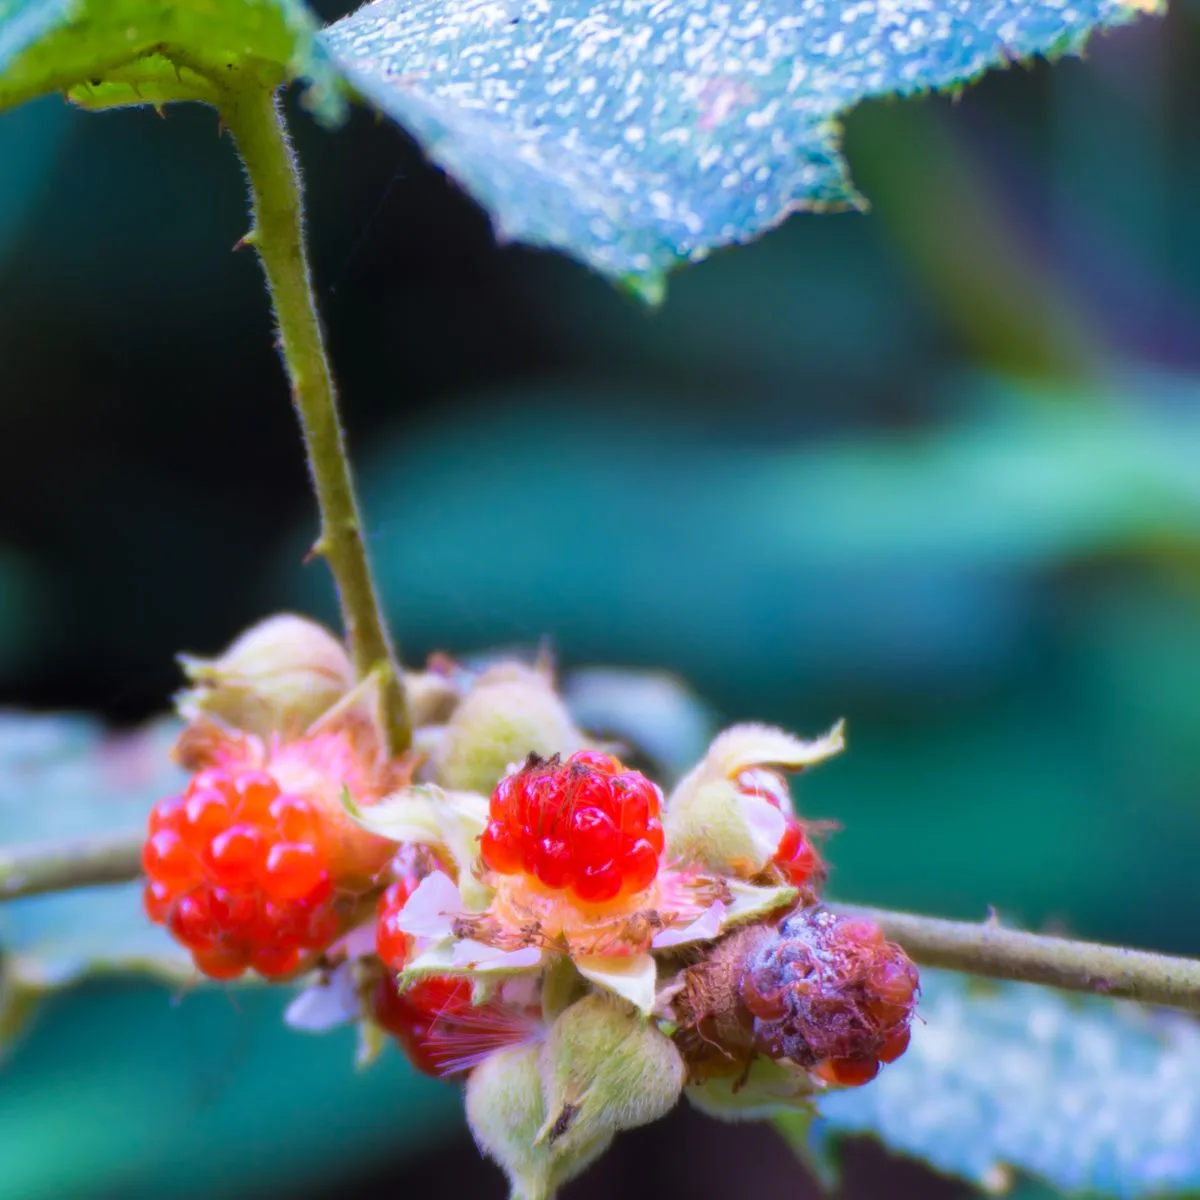 ʻākala, also known as Hawaiian raspberry